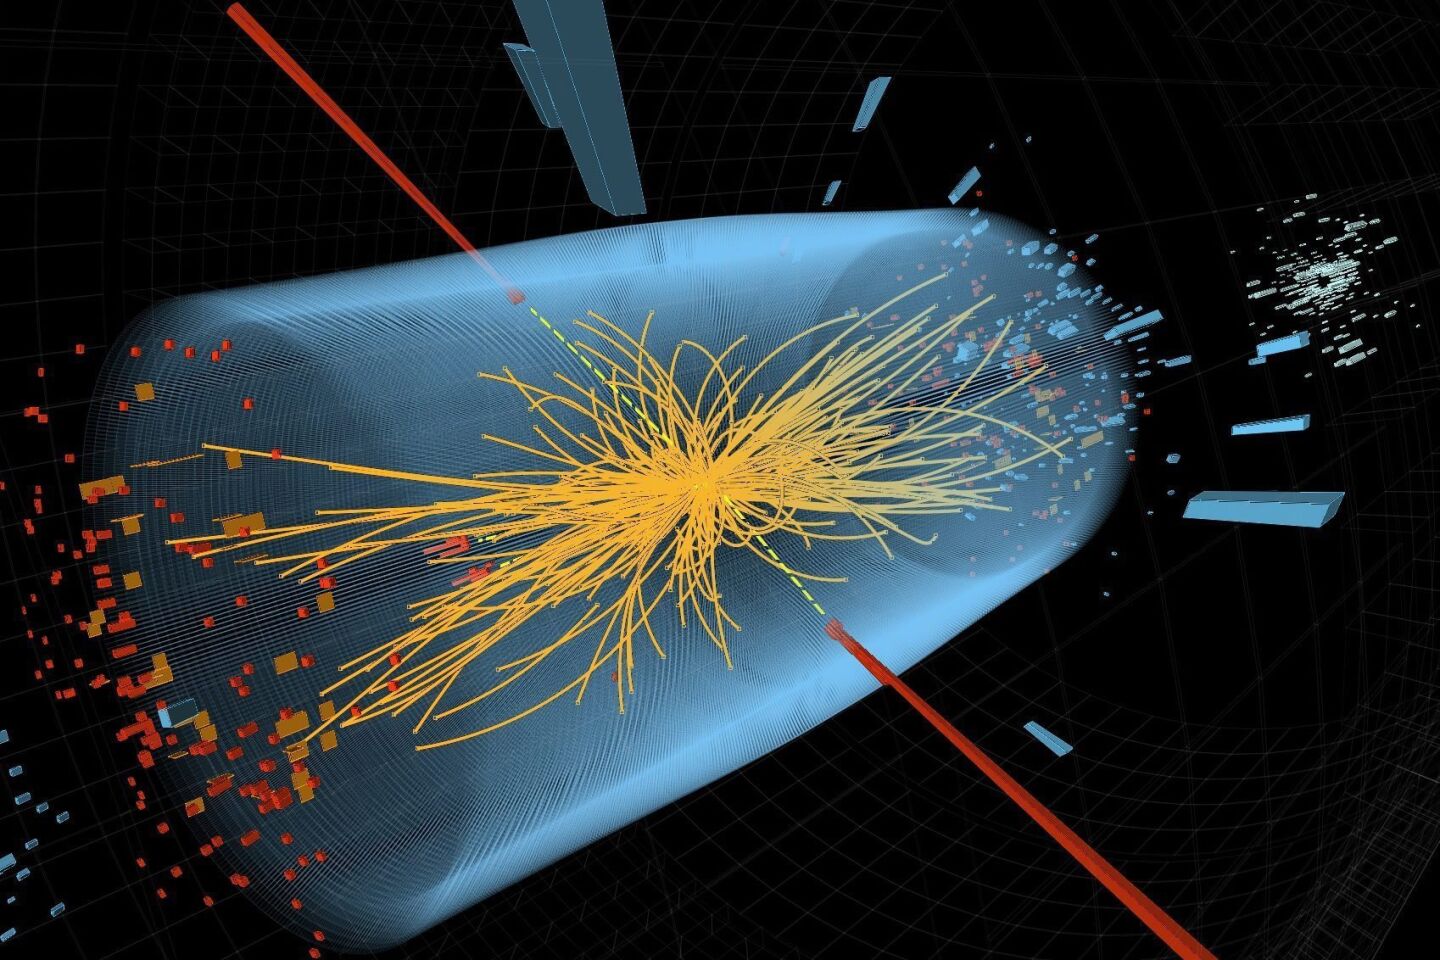 High-power particle smashing at CERN